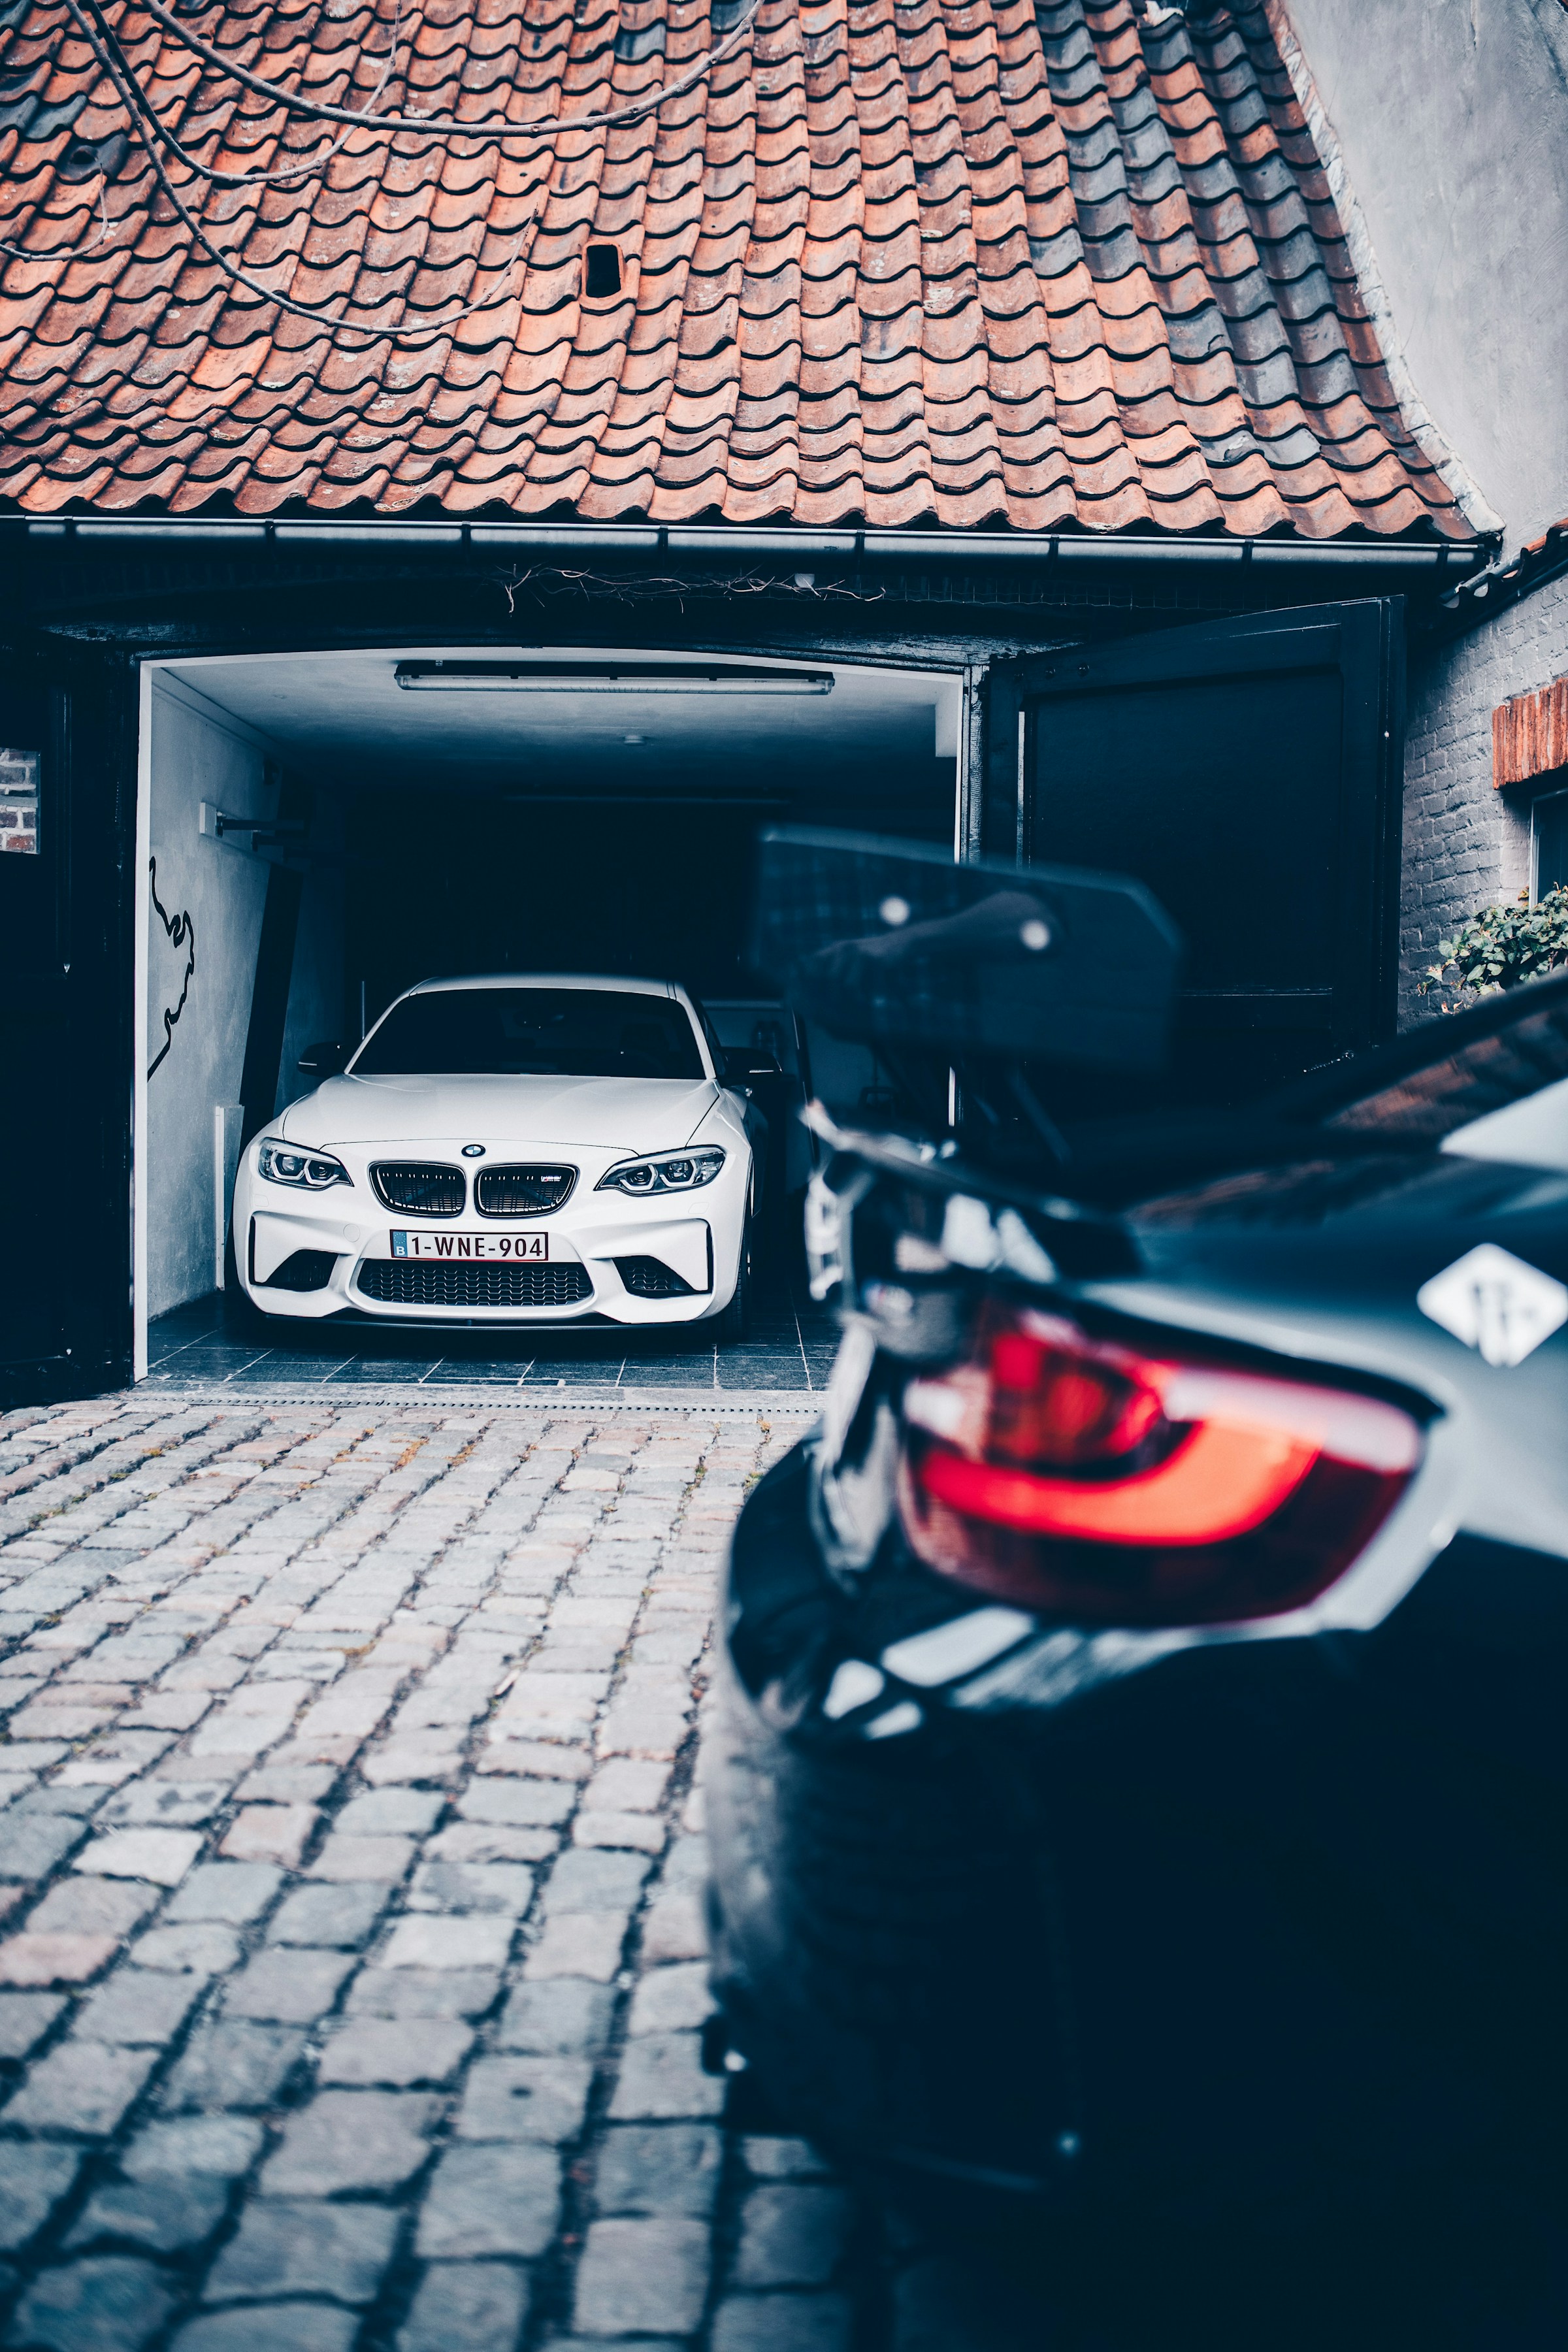 A car in a garage | Source: Unsplash